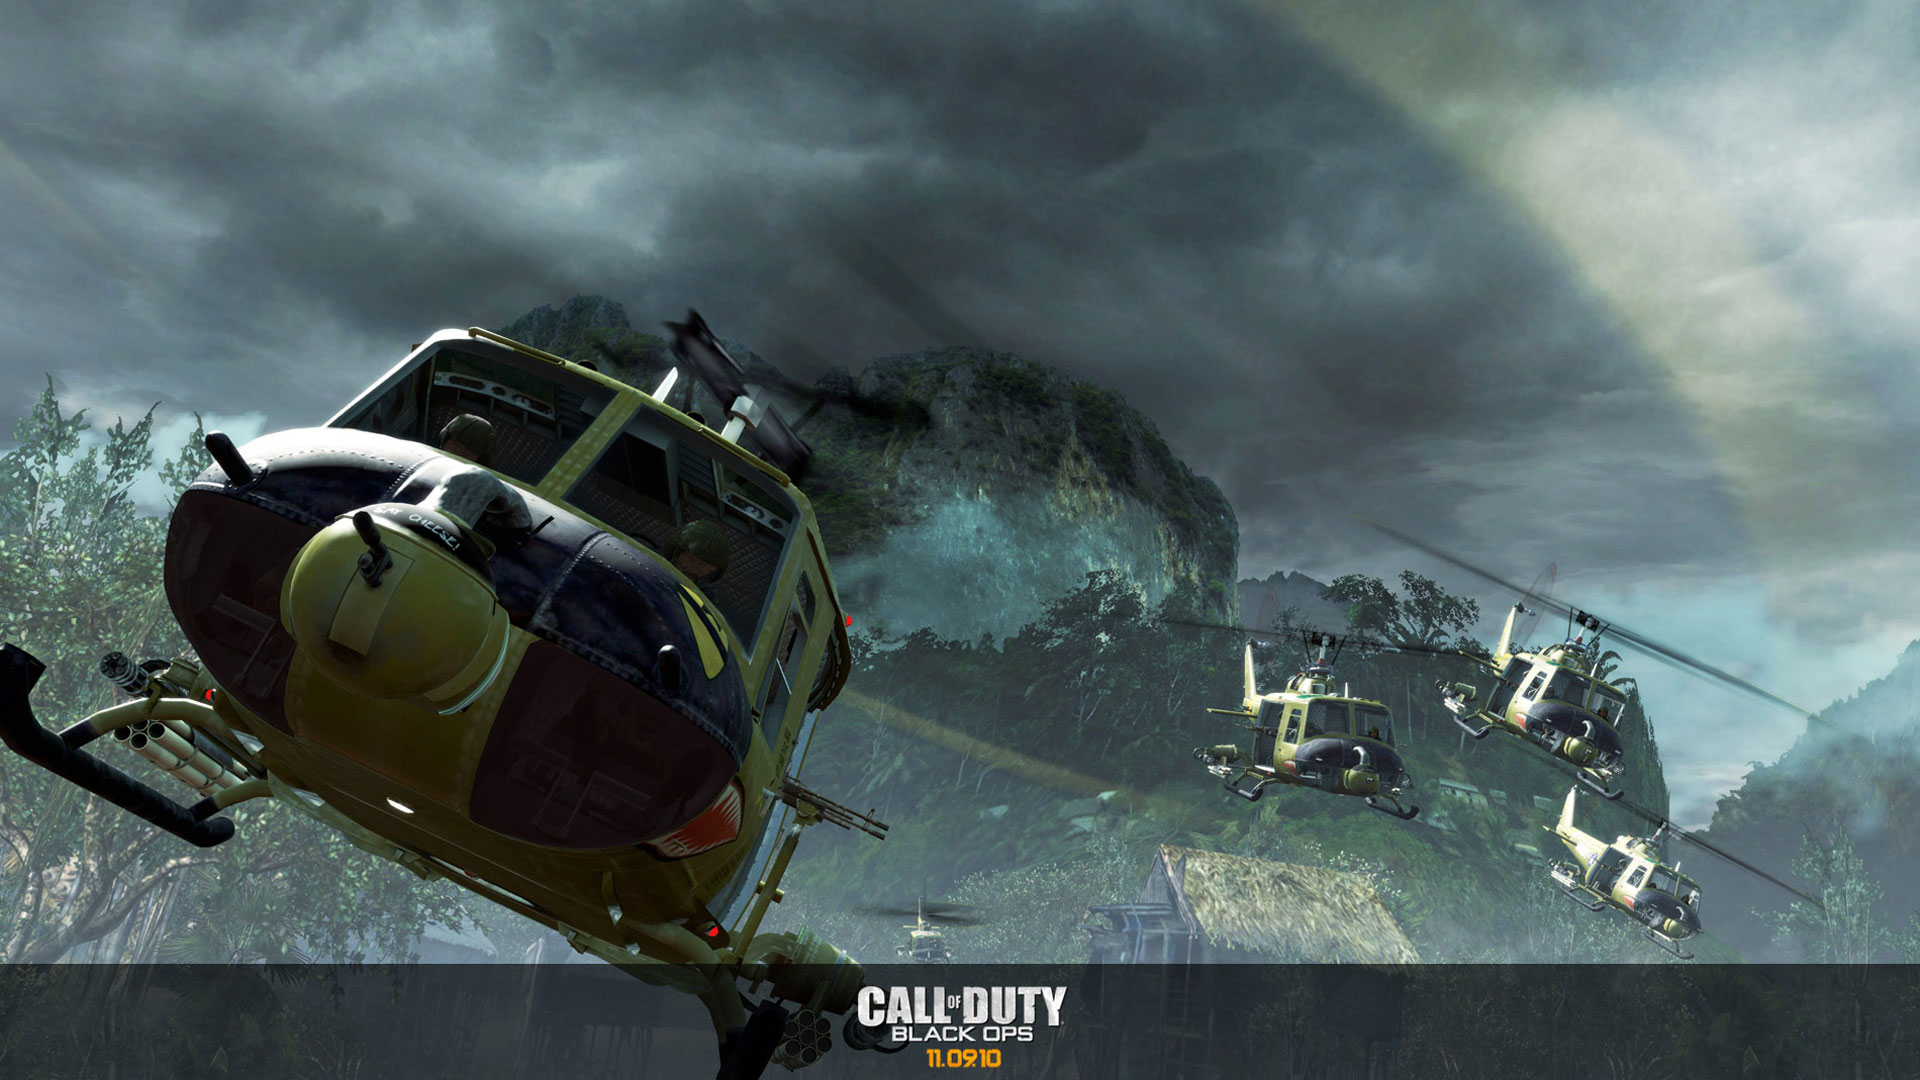 Call Of Duty Black Ops HD Wallpaper 1920x1080 ID29868